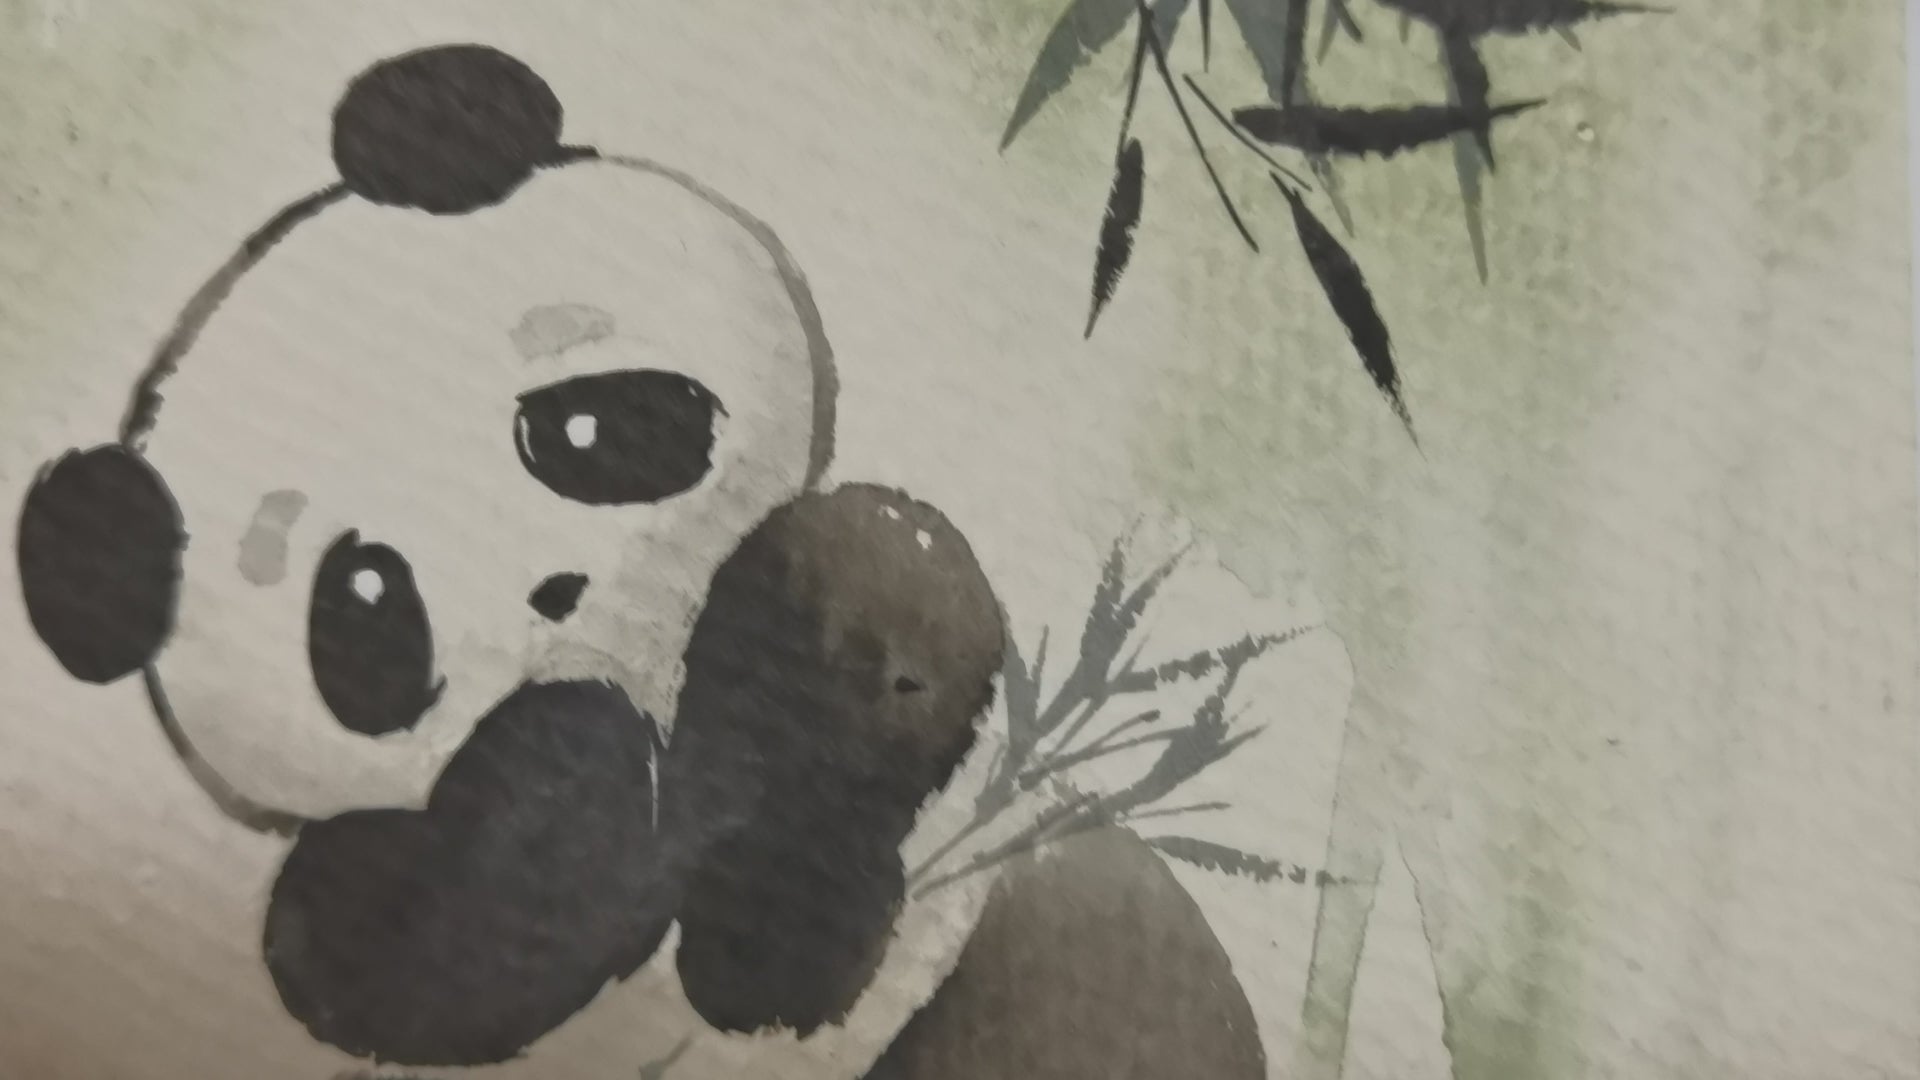 Panda Vividland Handmade Art Printing Bamboo Playful Cute with Wood Frame